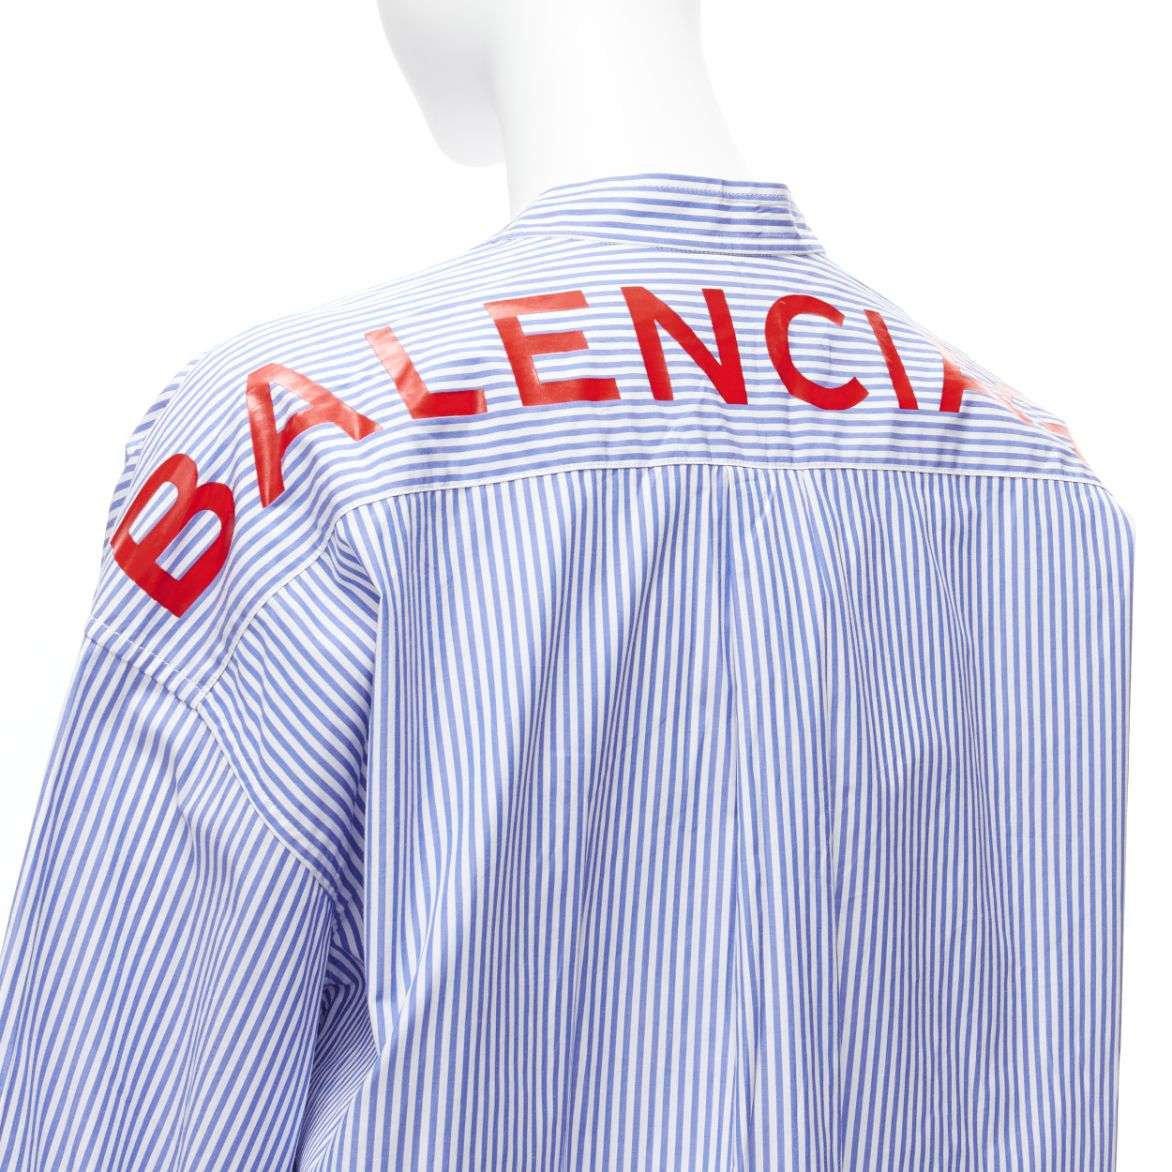 Balenciaga new BALENCIAGA Demna 2017 red BB logo blue white stripe relaxed cut oversized shirt FR34 XS Size XS / US 0-2 / IT 36-38 - 7 Thumbnail